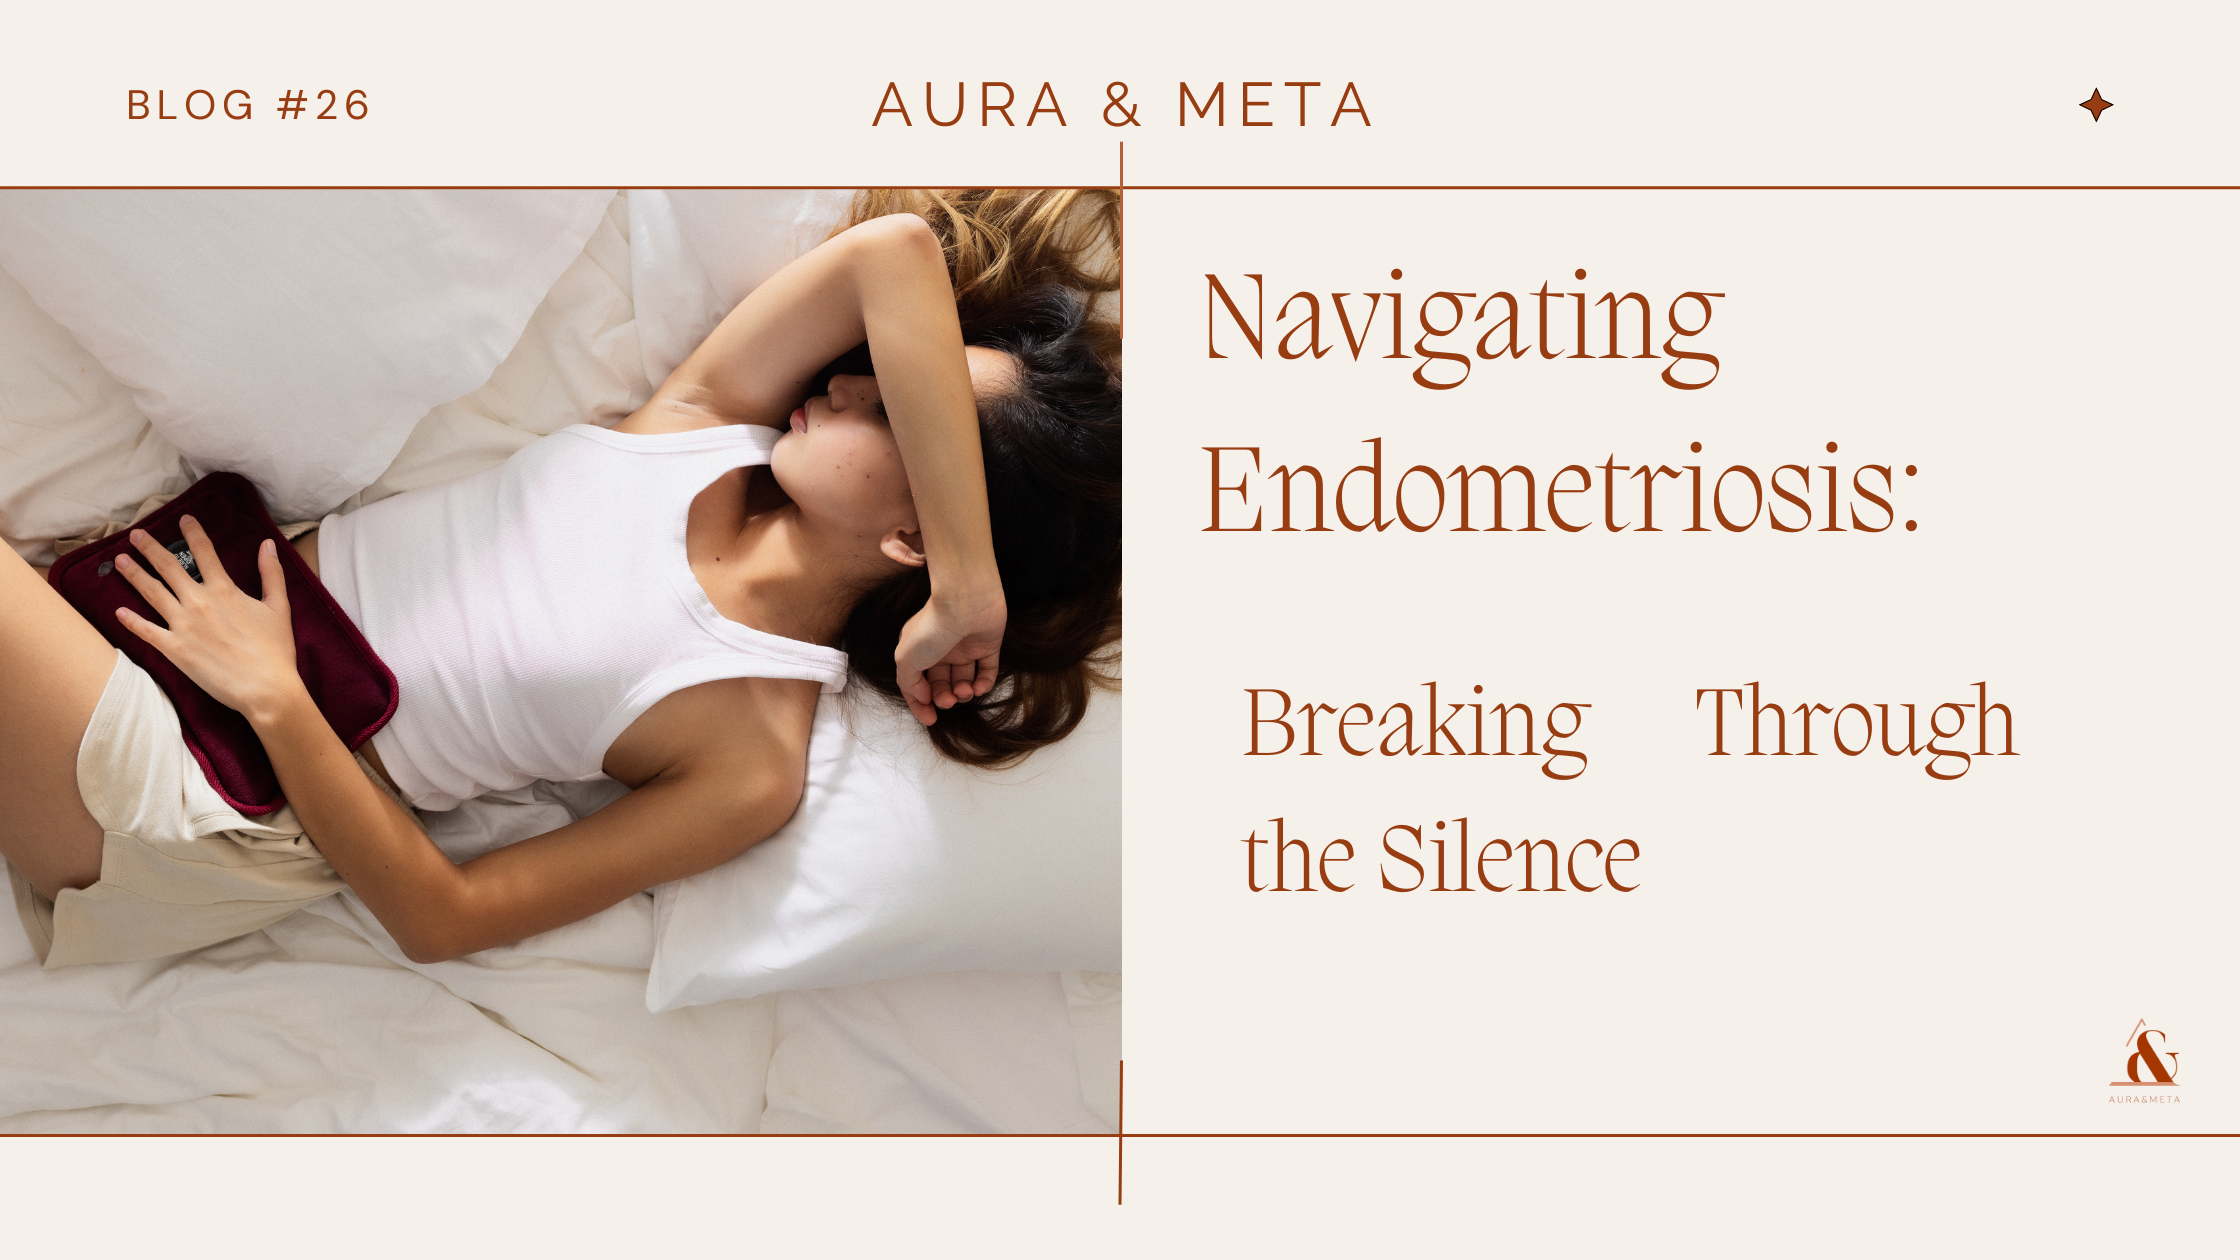 Managing Endometriosis Holistically